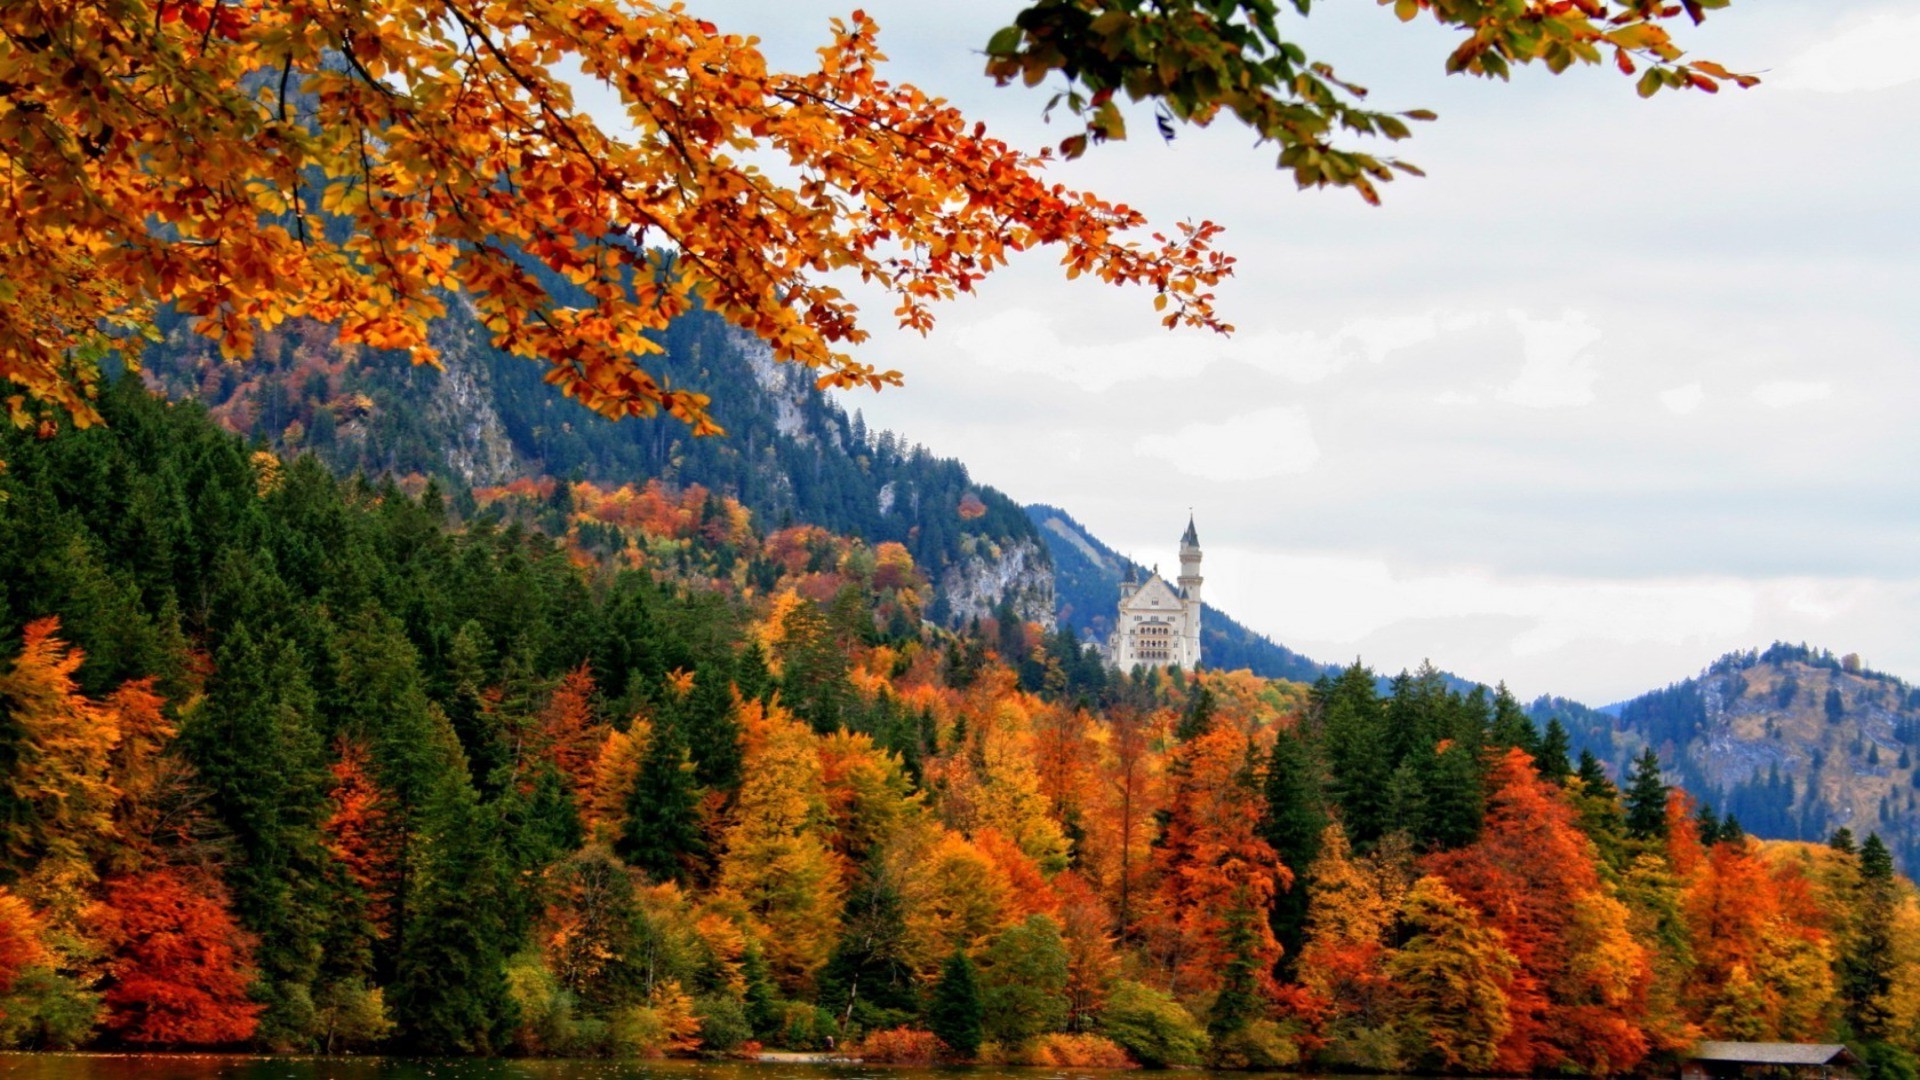 autumn fall wood tree leaf nature landscape outdoors scenic maple season scenery gold mountain park travel